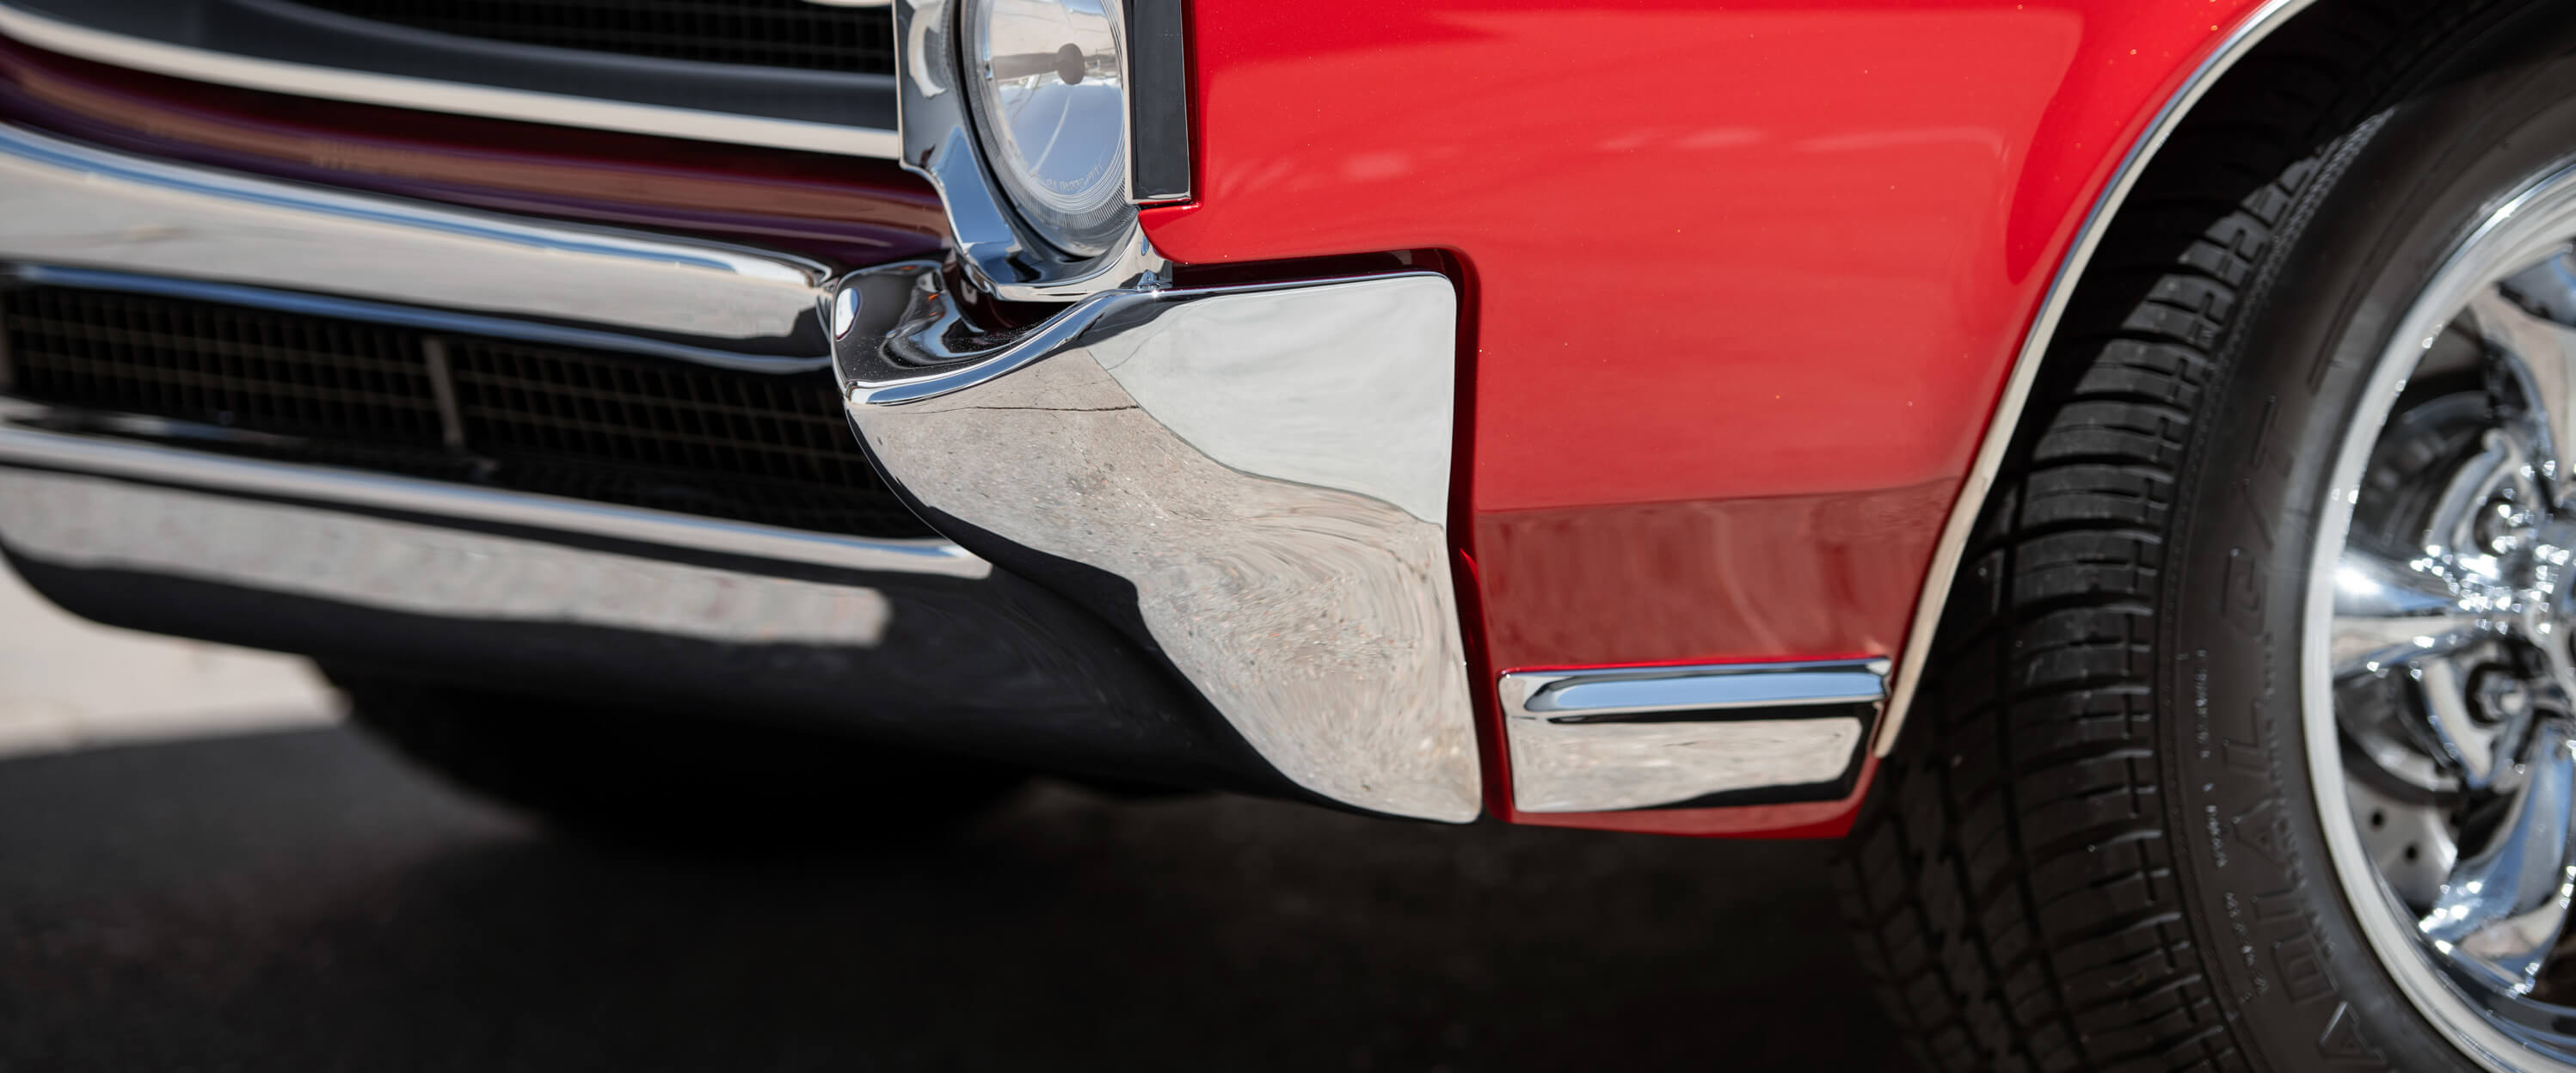 1966-Pontiac-GTO-Red-slideshow-012@2x